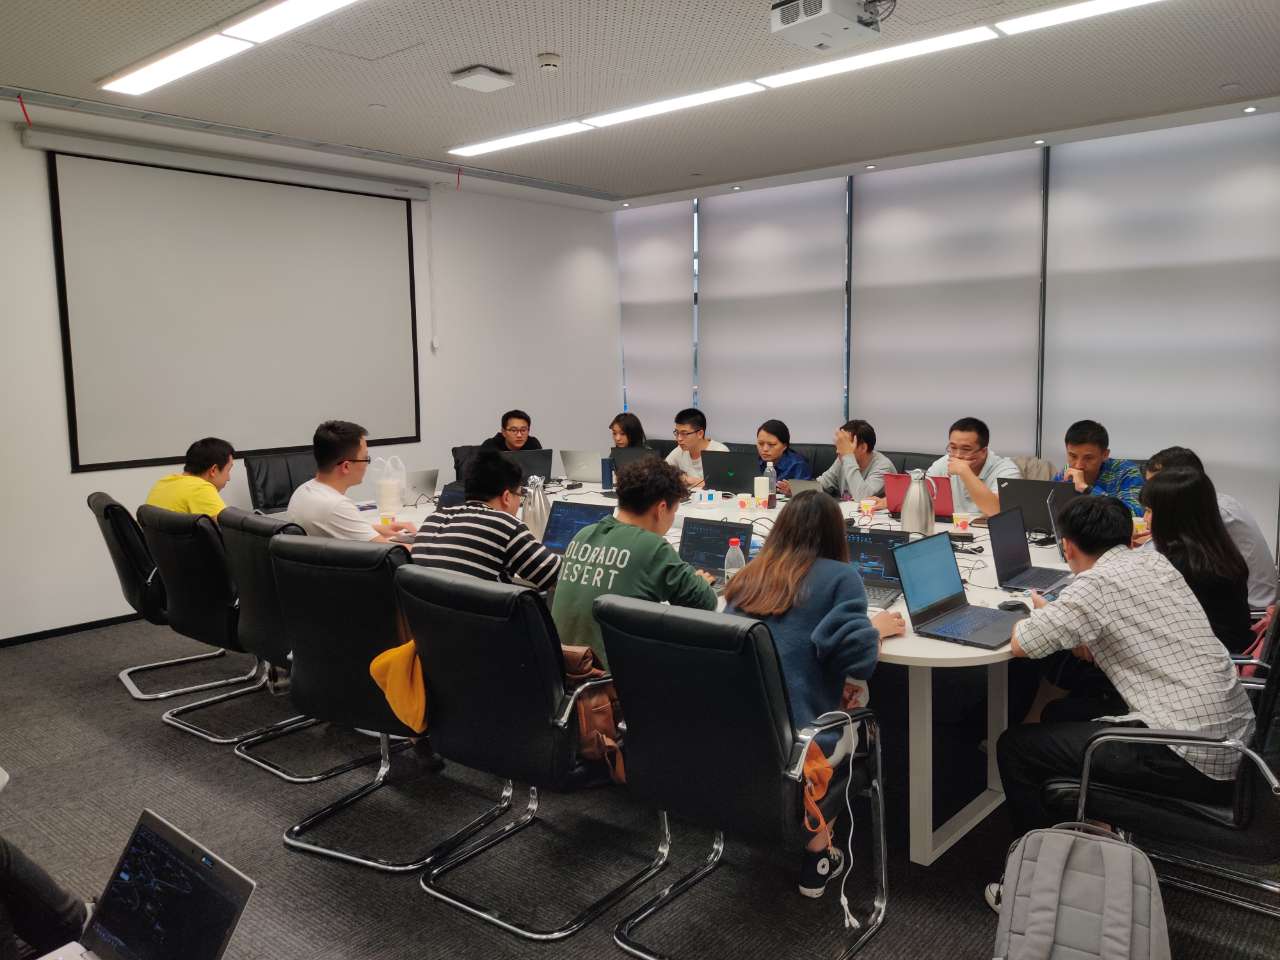 iS-RPA 技术认证培训 上海 201901025 班